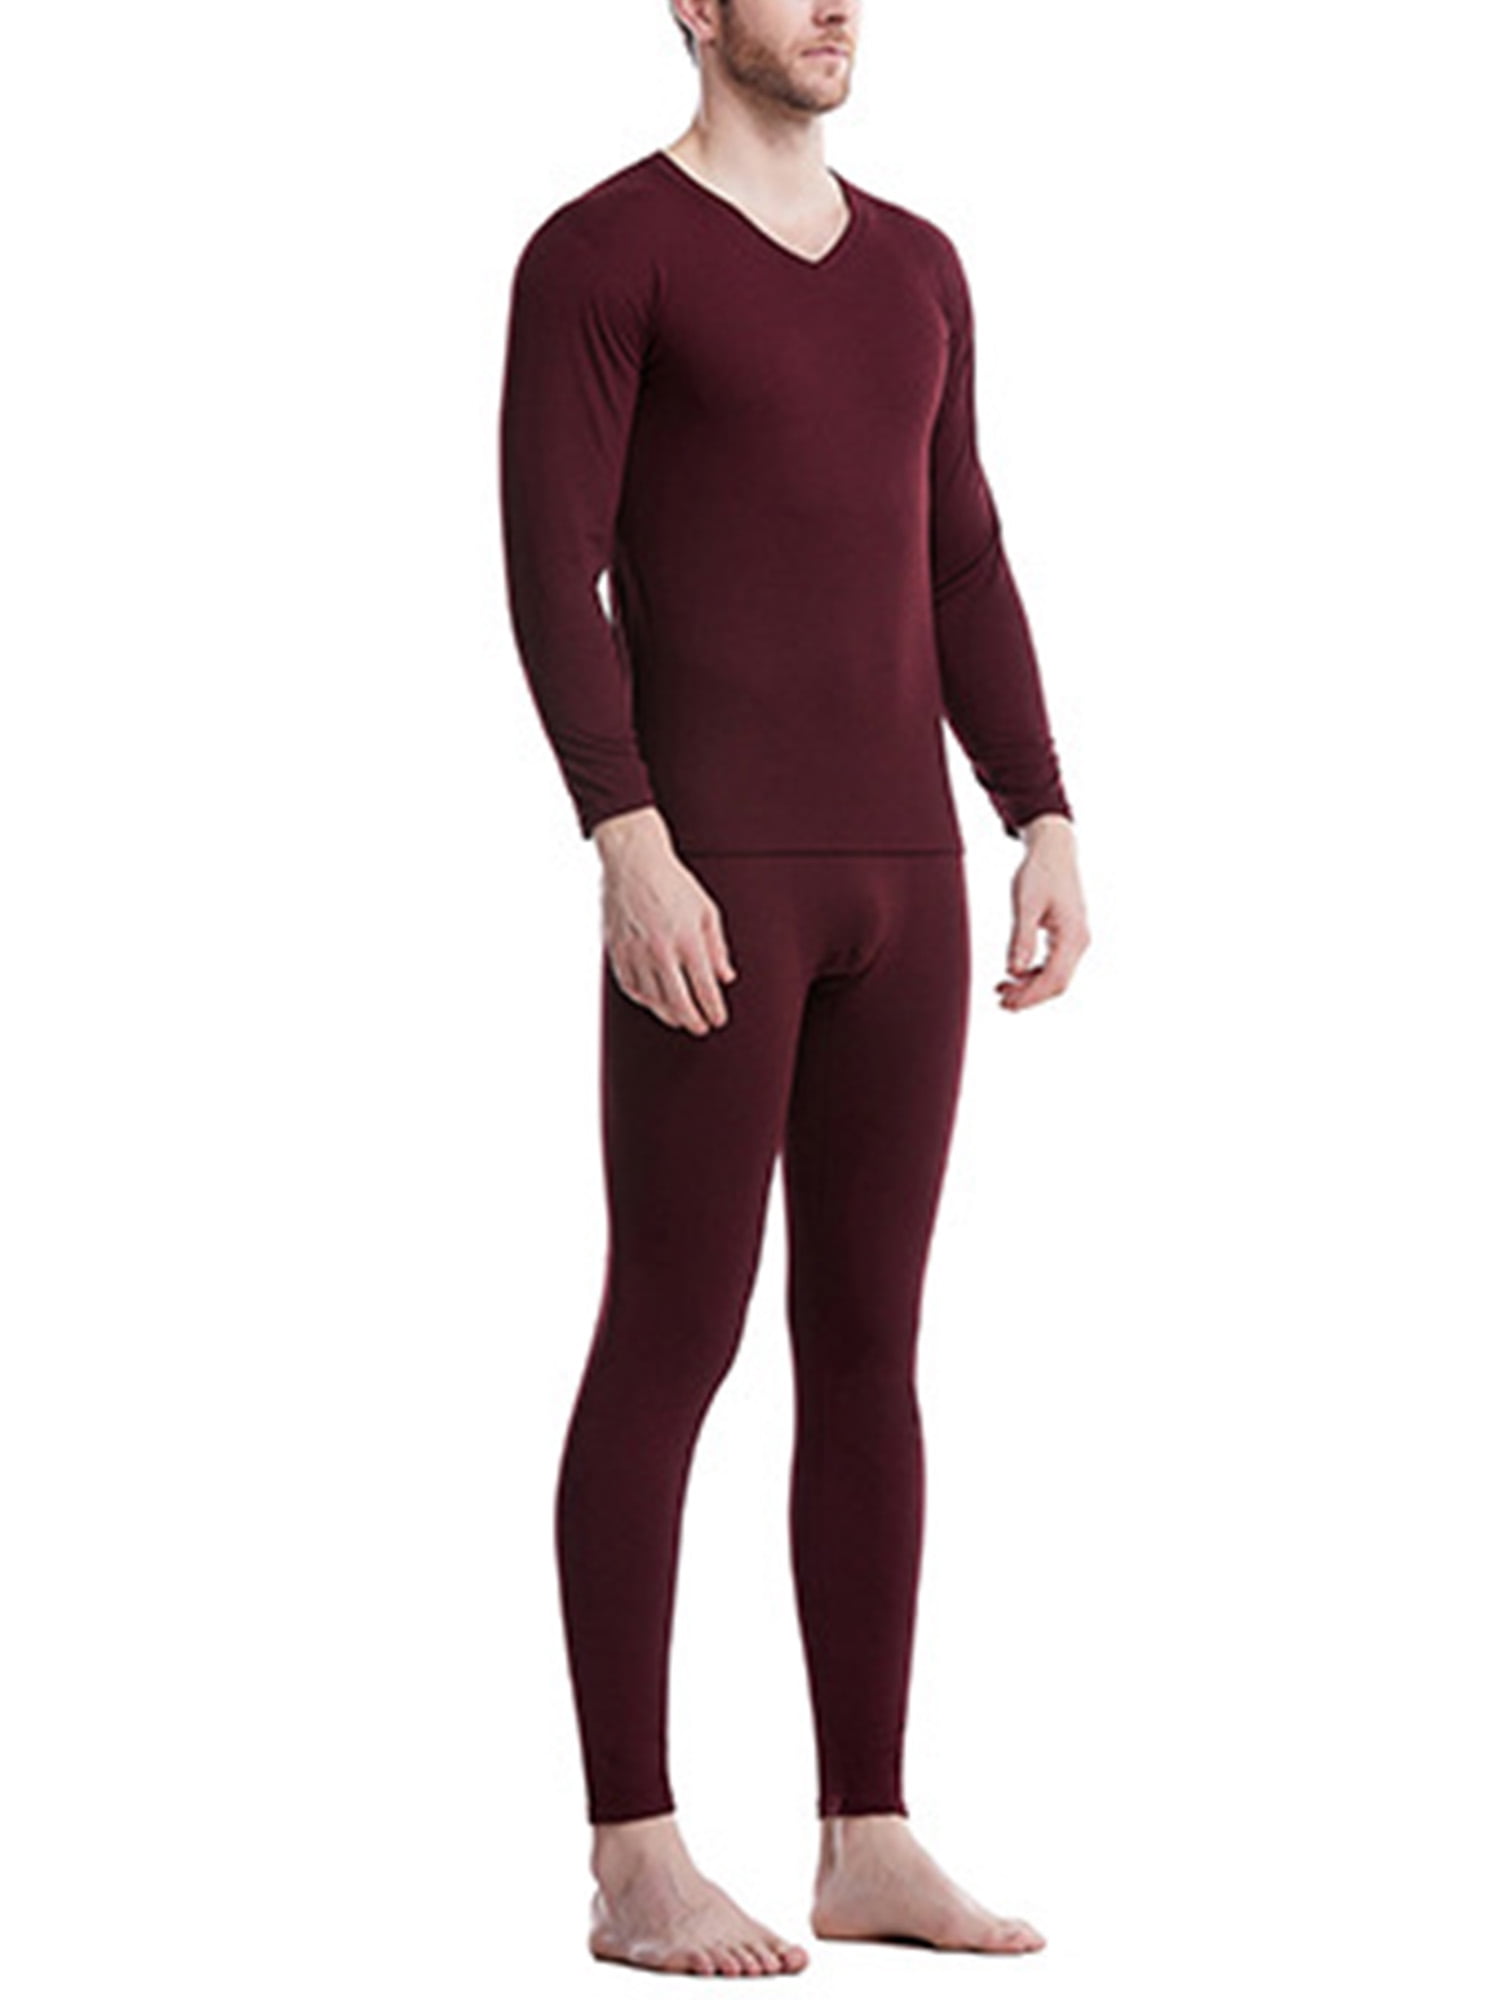 Men Long Johns Two-piece Warm Underwear Compression Thermal Sleepwear XXXL Shirt